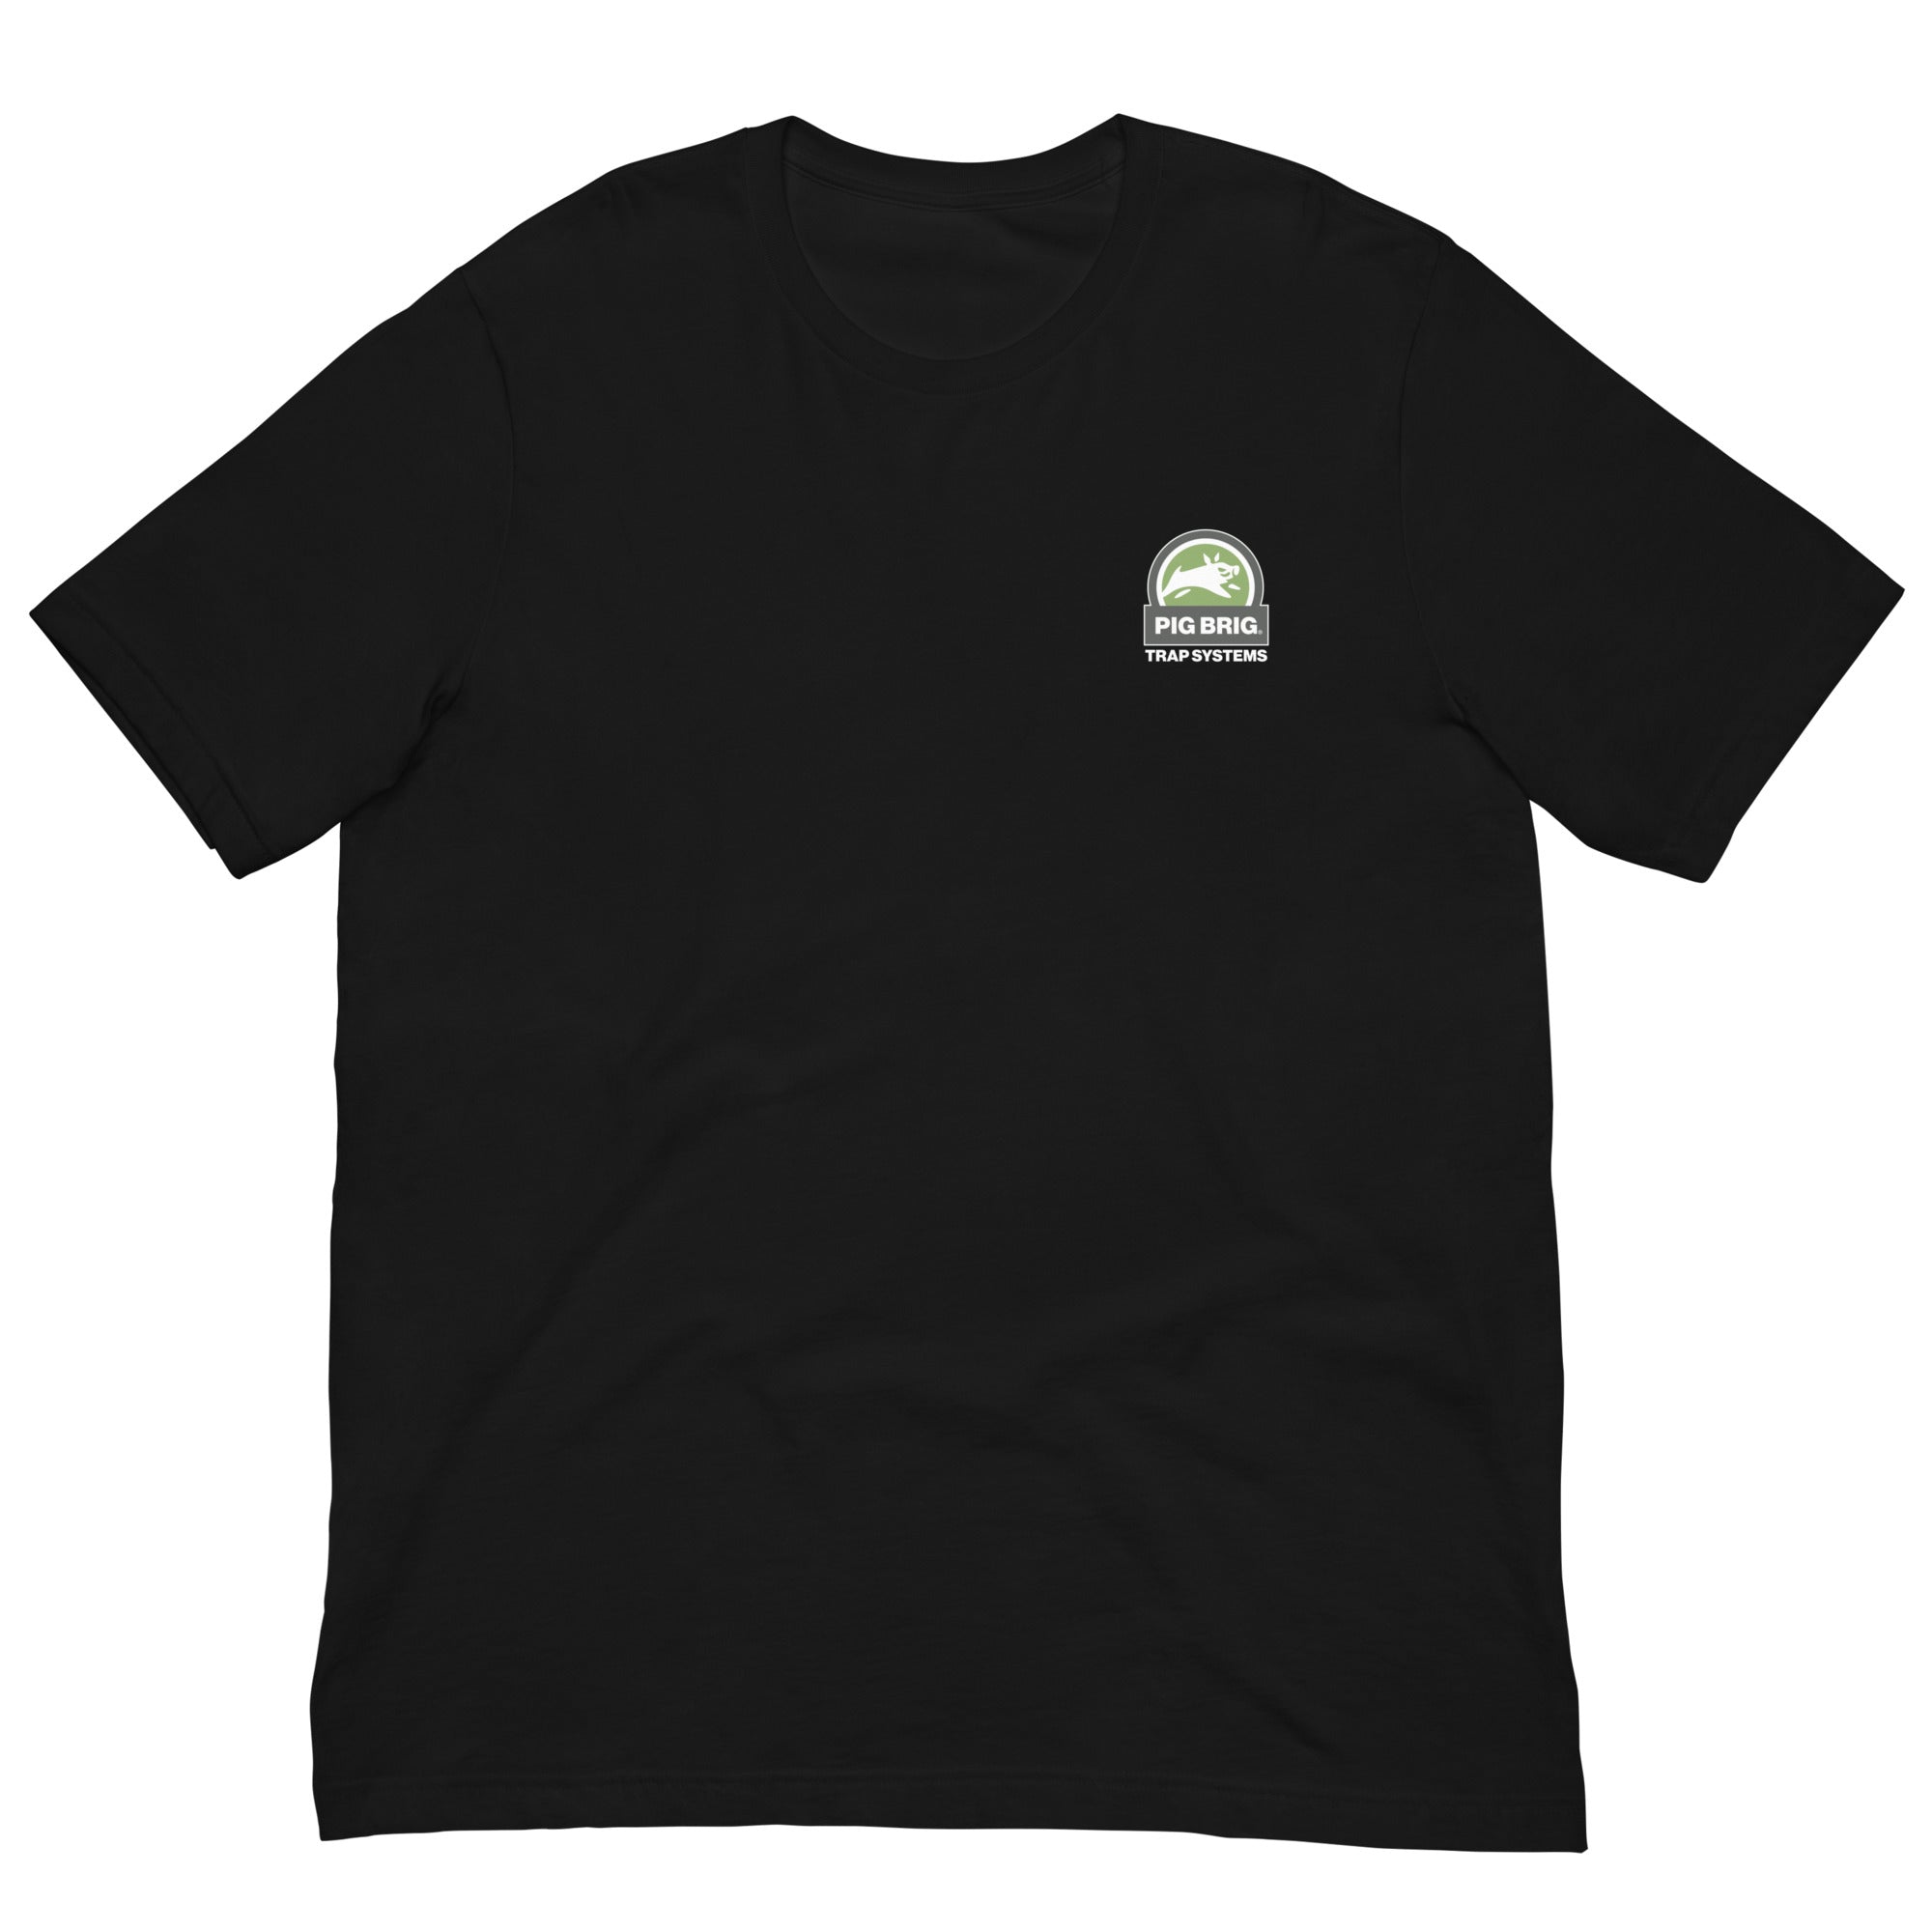 It's Hoggin' Time. - Short-Sleeve Unisex T-Shirt